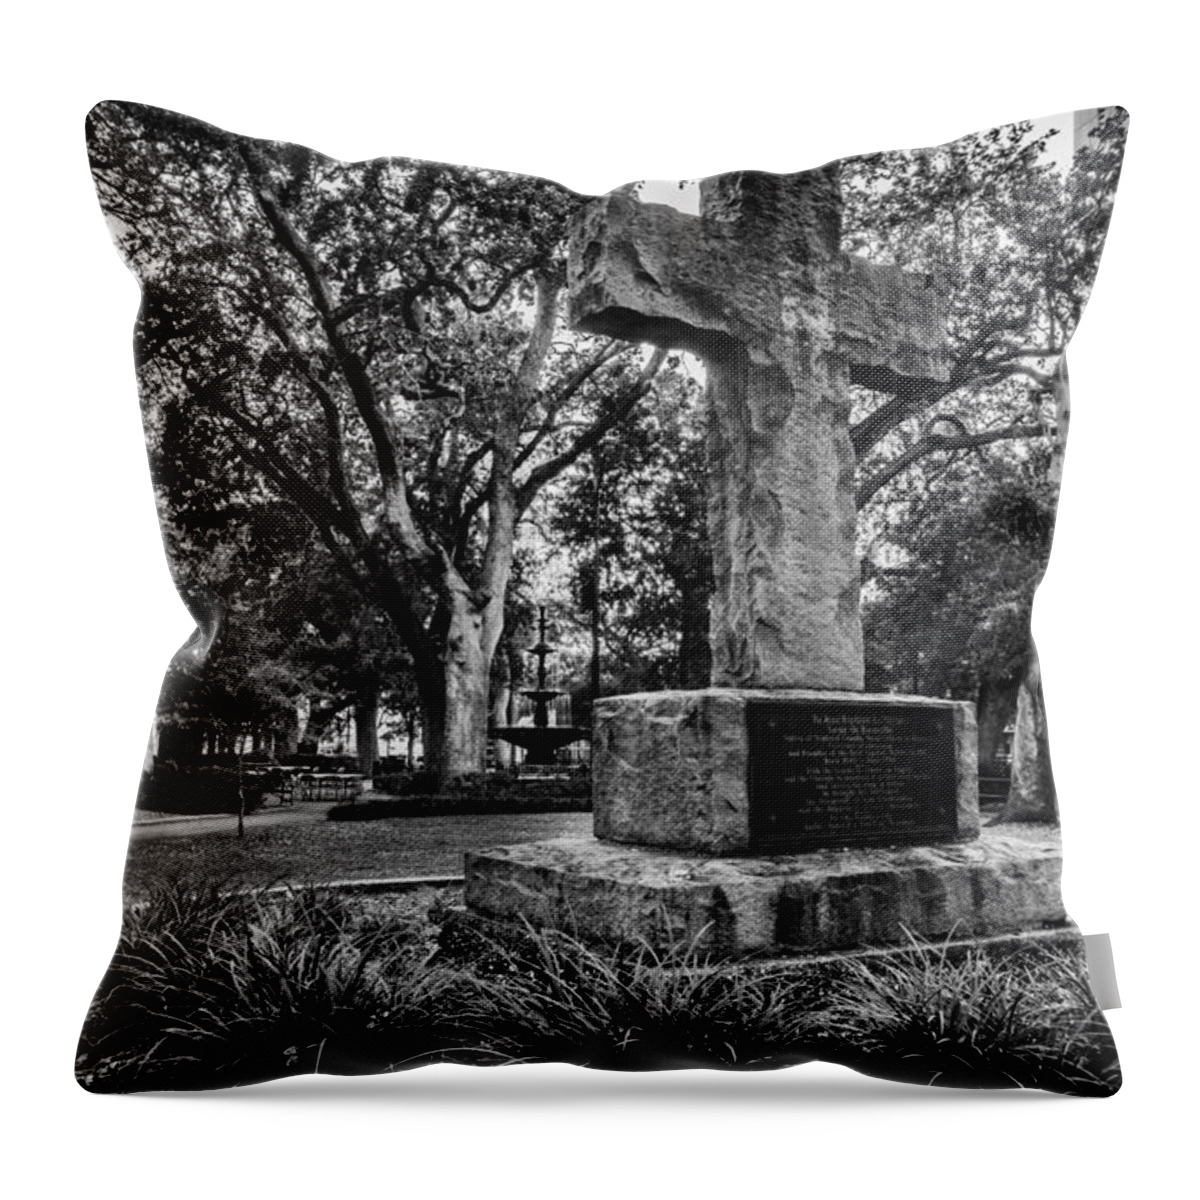 Alabama Throw Pillow featuring the digital art Bienville Cross by Michael Thomas